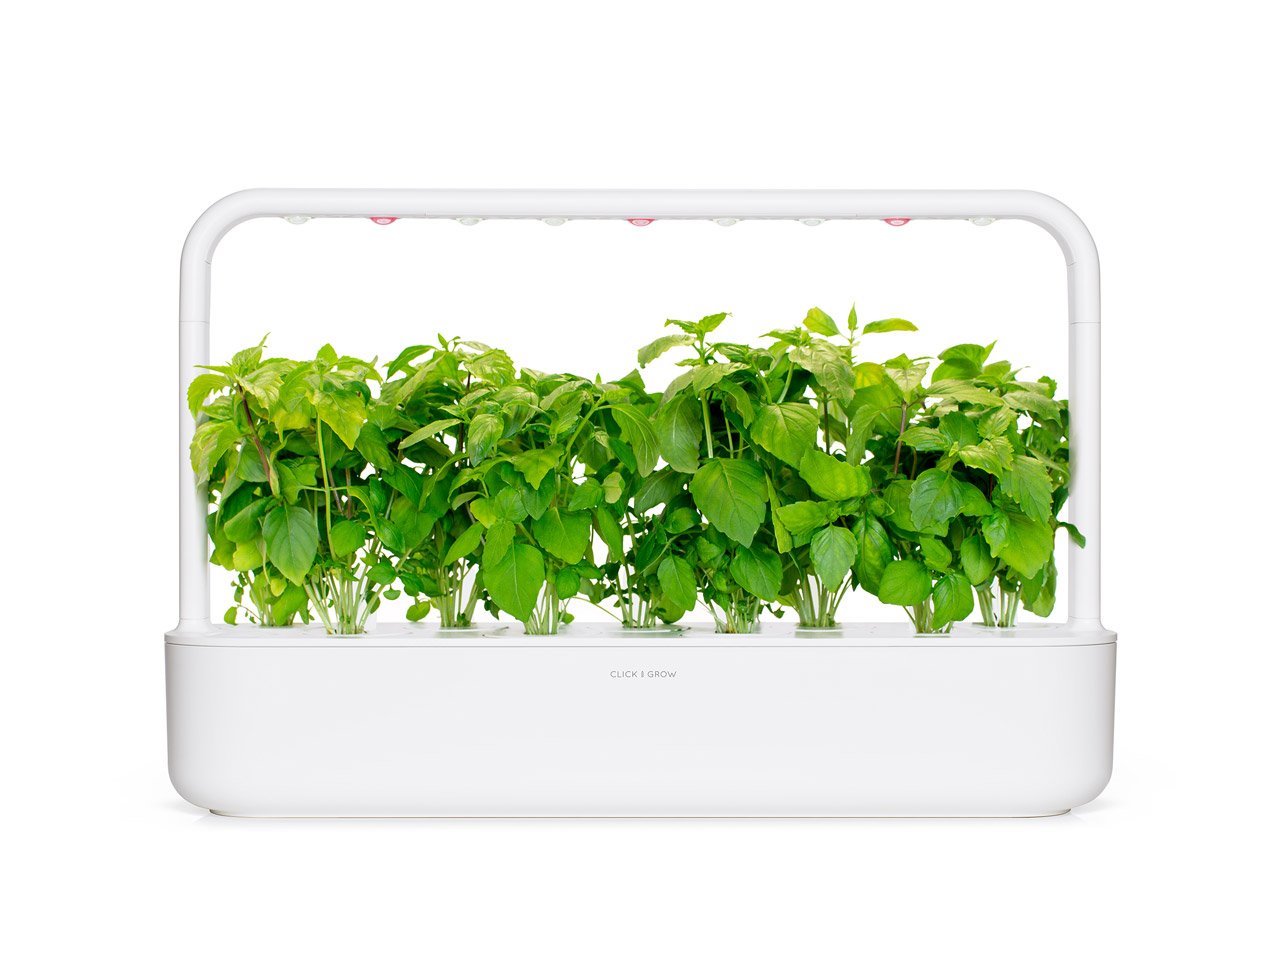 smart-garden-click-grow-növénykapszula-utántöltő-fahéj-illatú-bazsalikom